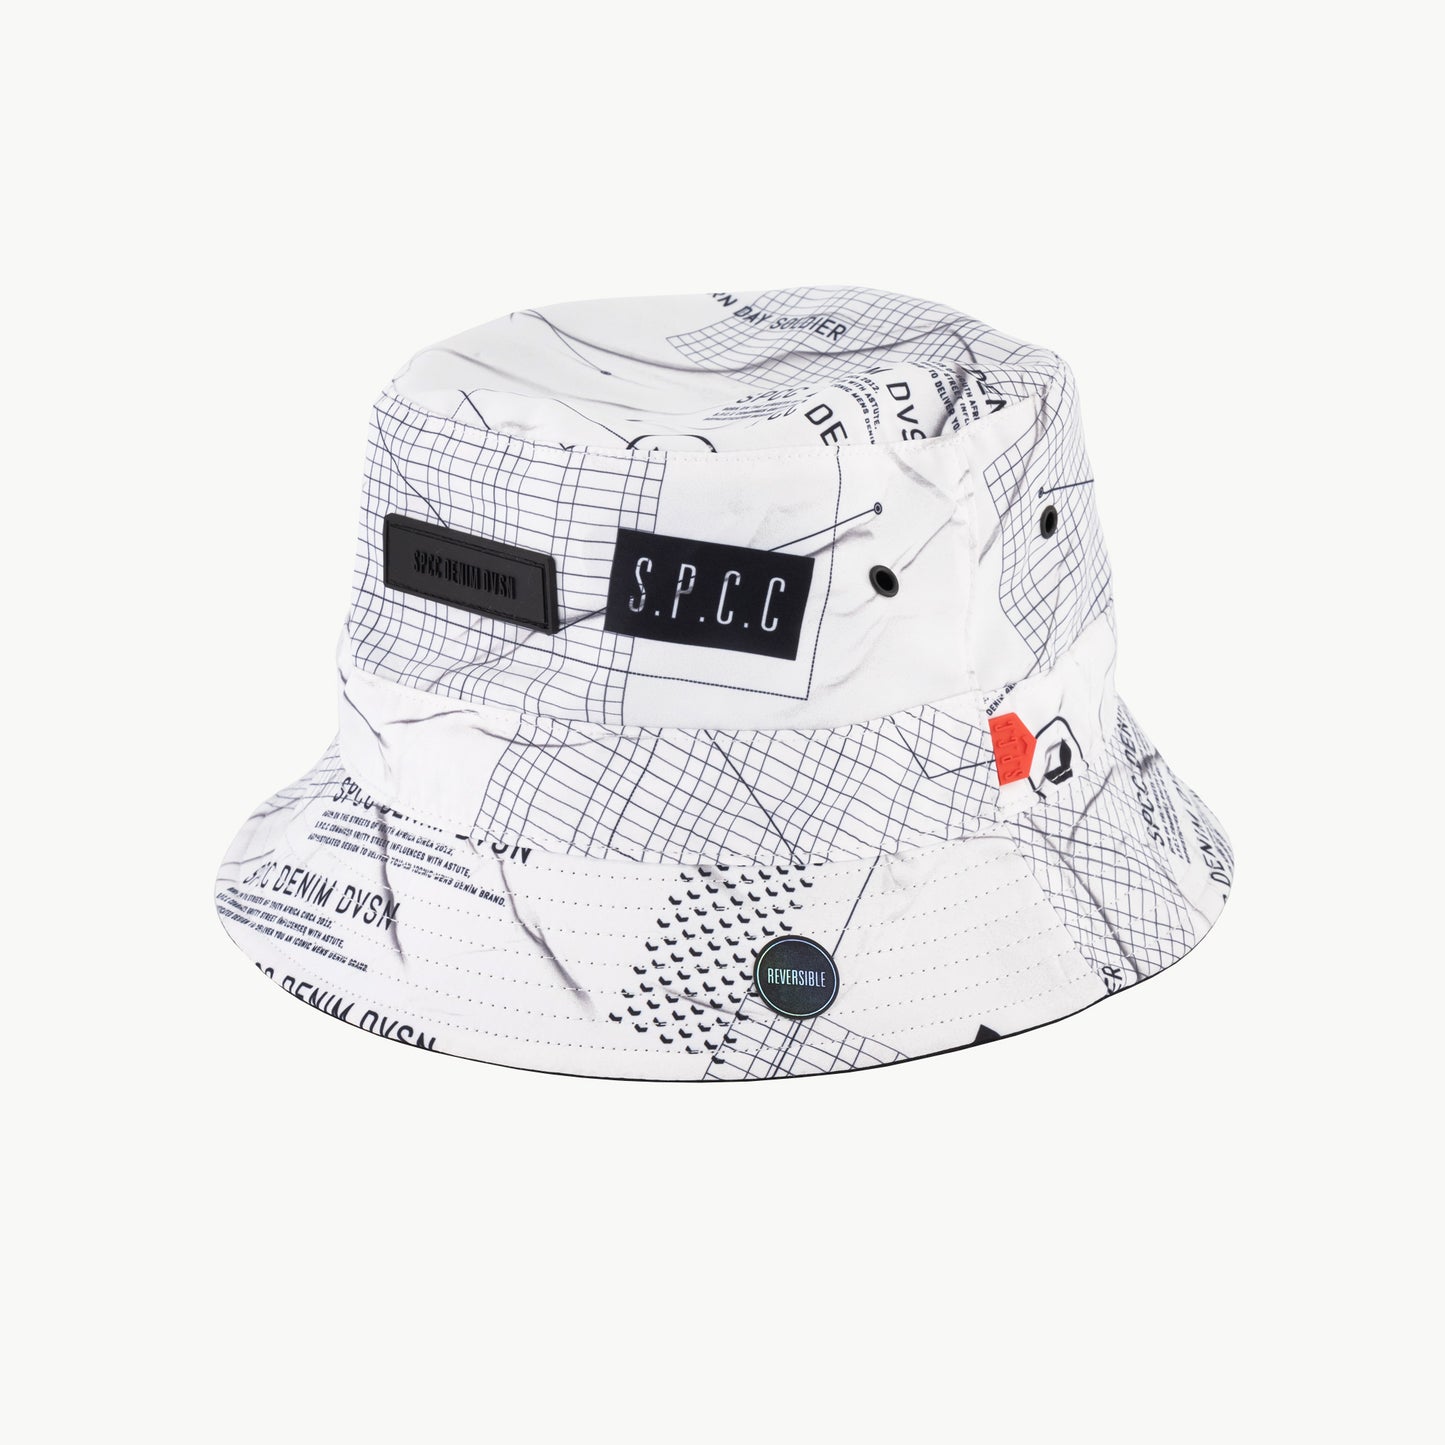 Fairfax Bucket Hat - White – S.P.C.C Official Store